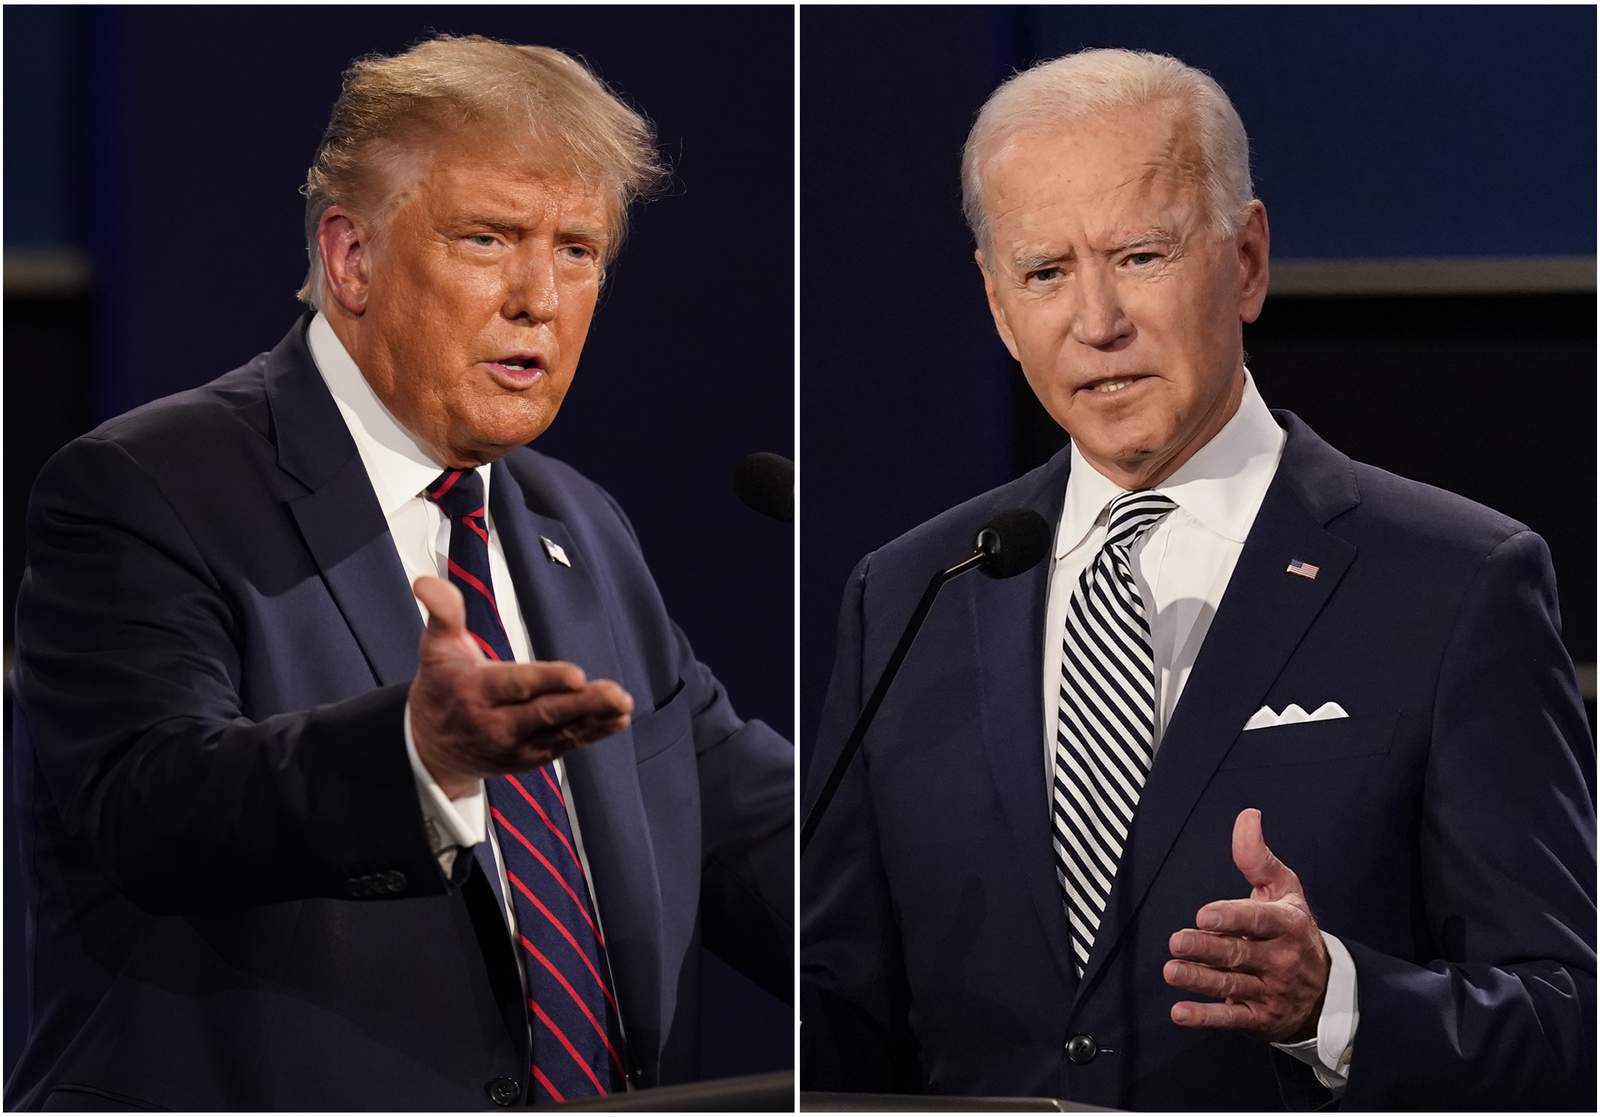 LIVE STREAM: Trump, Biden in final 2020 presidential debate